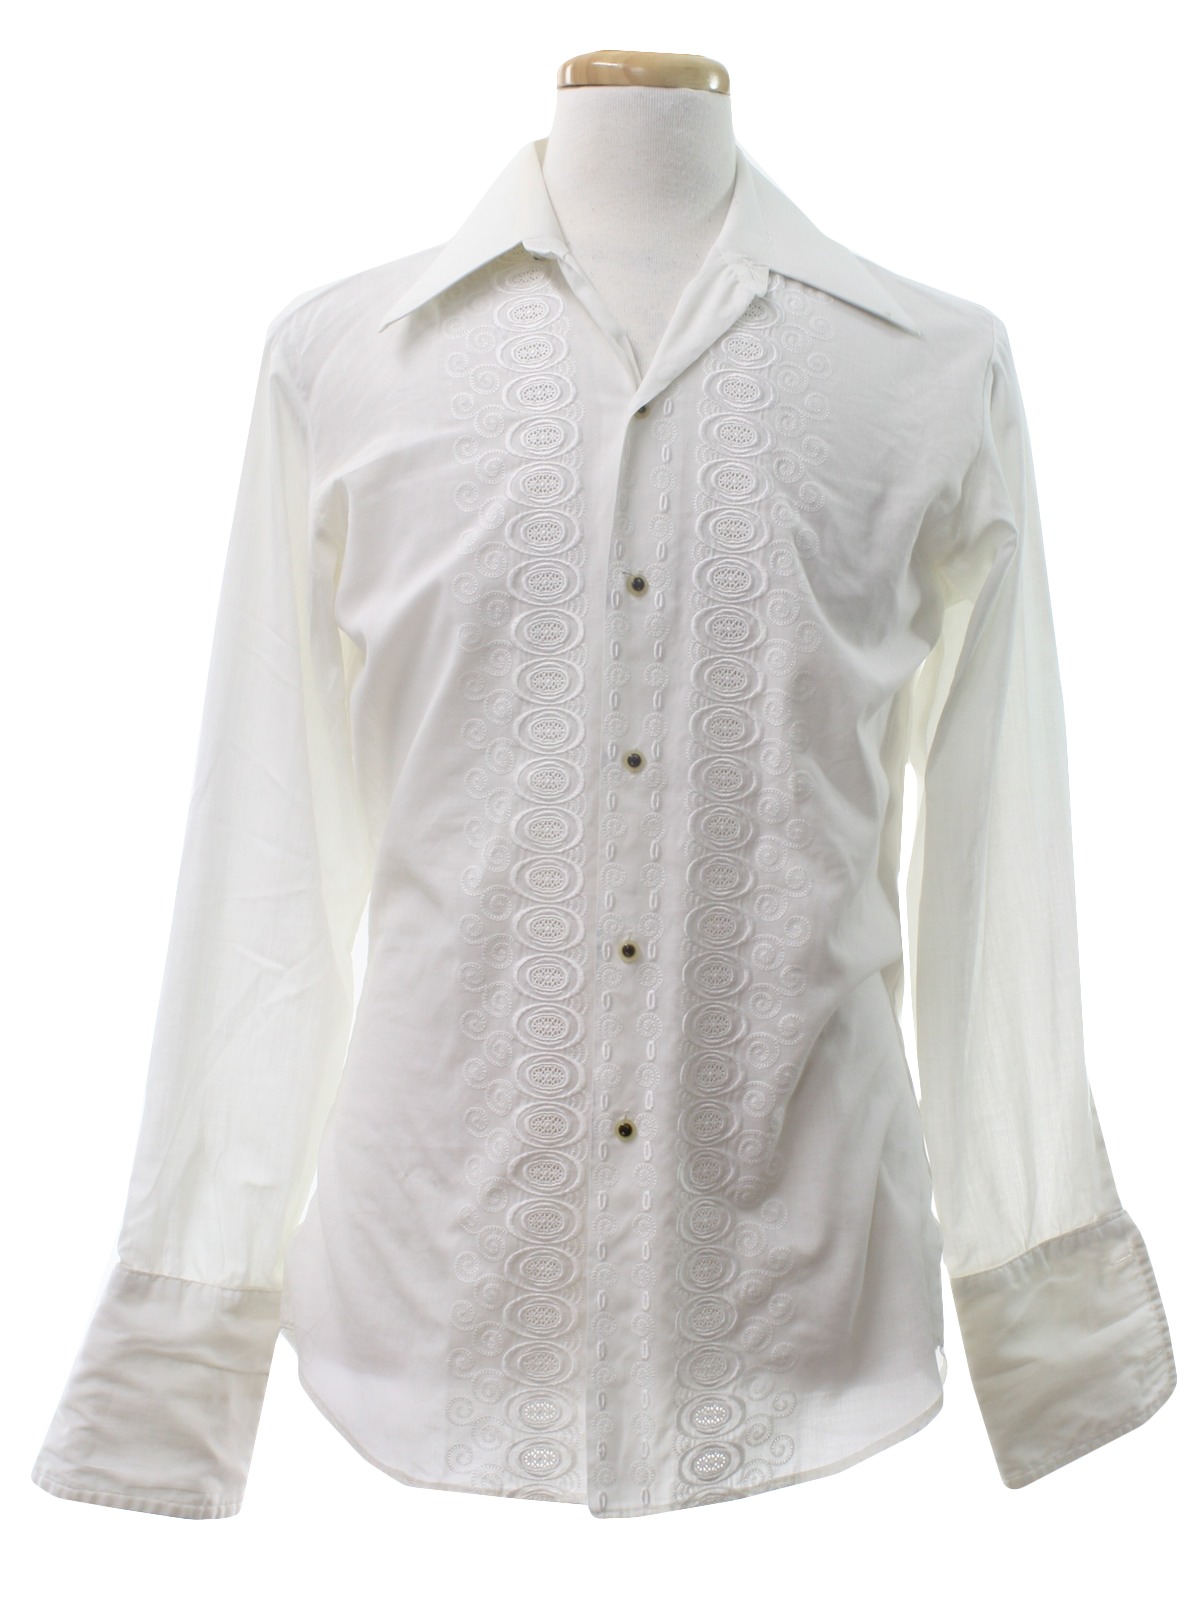 Retro 1970s Hippie Shirt: 70s -Consulate- Mens white background cotton ...